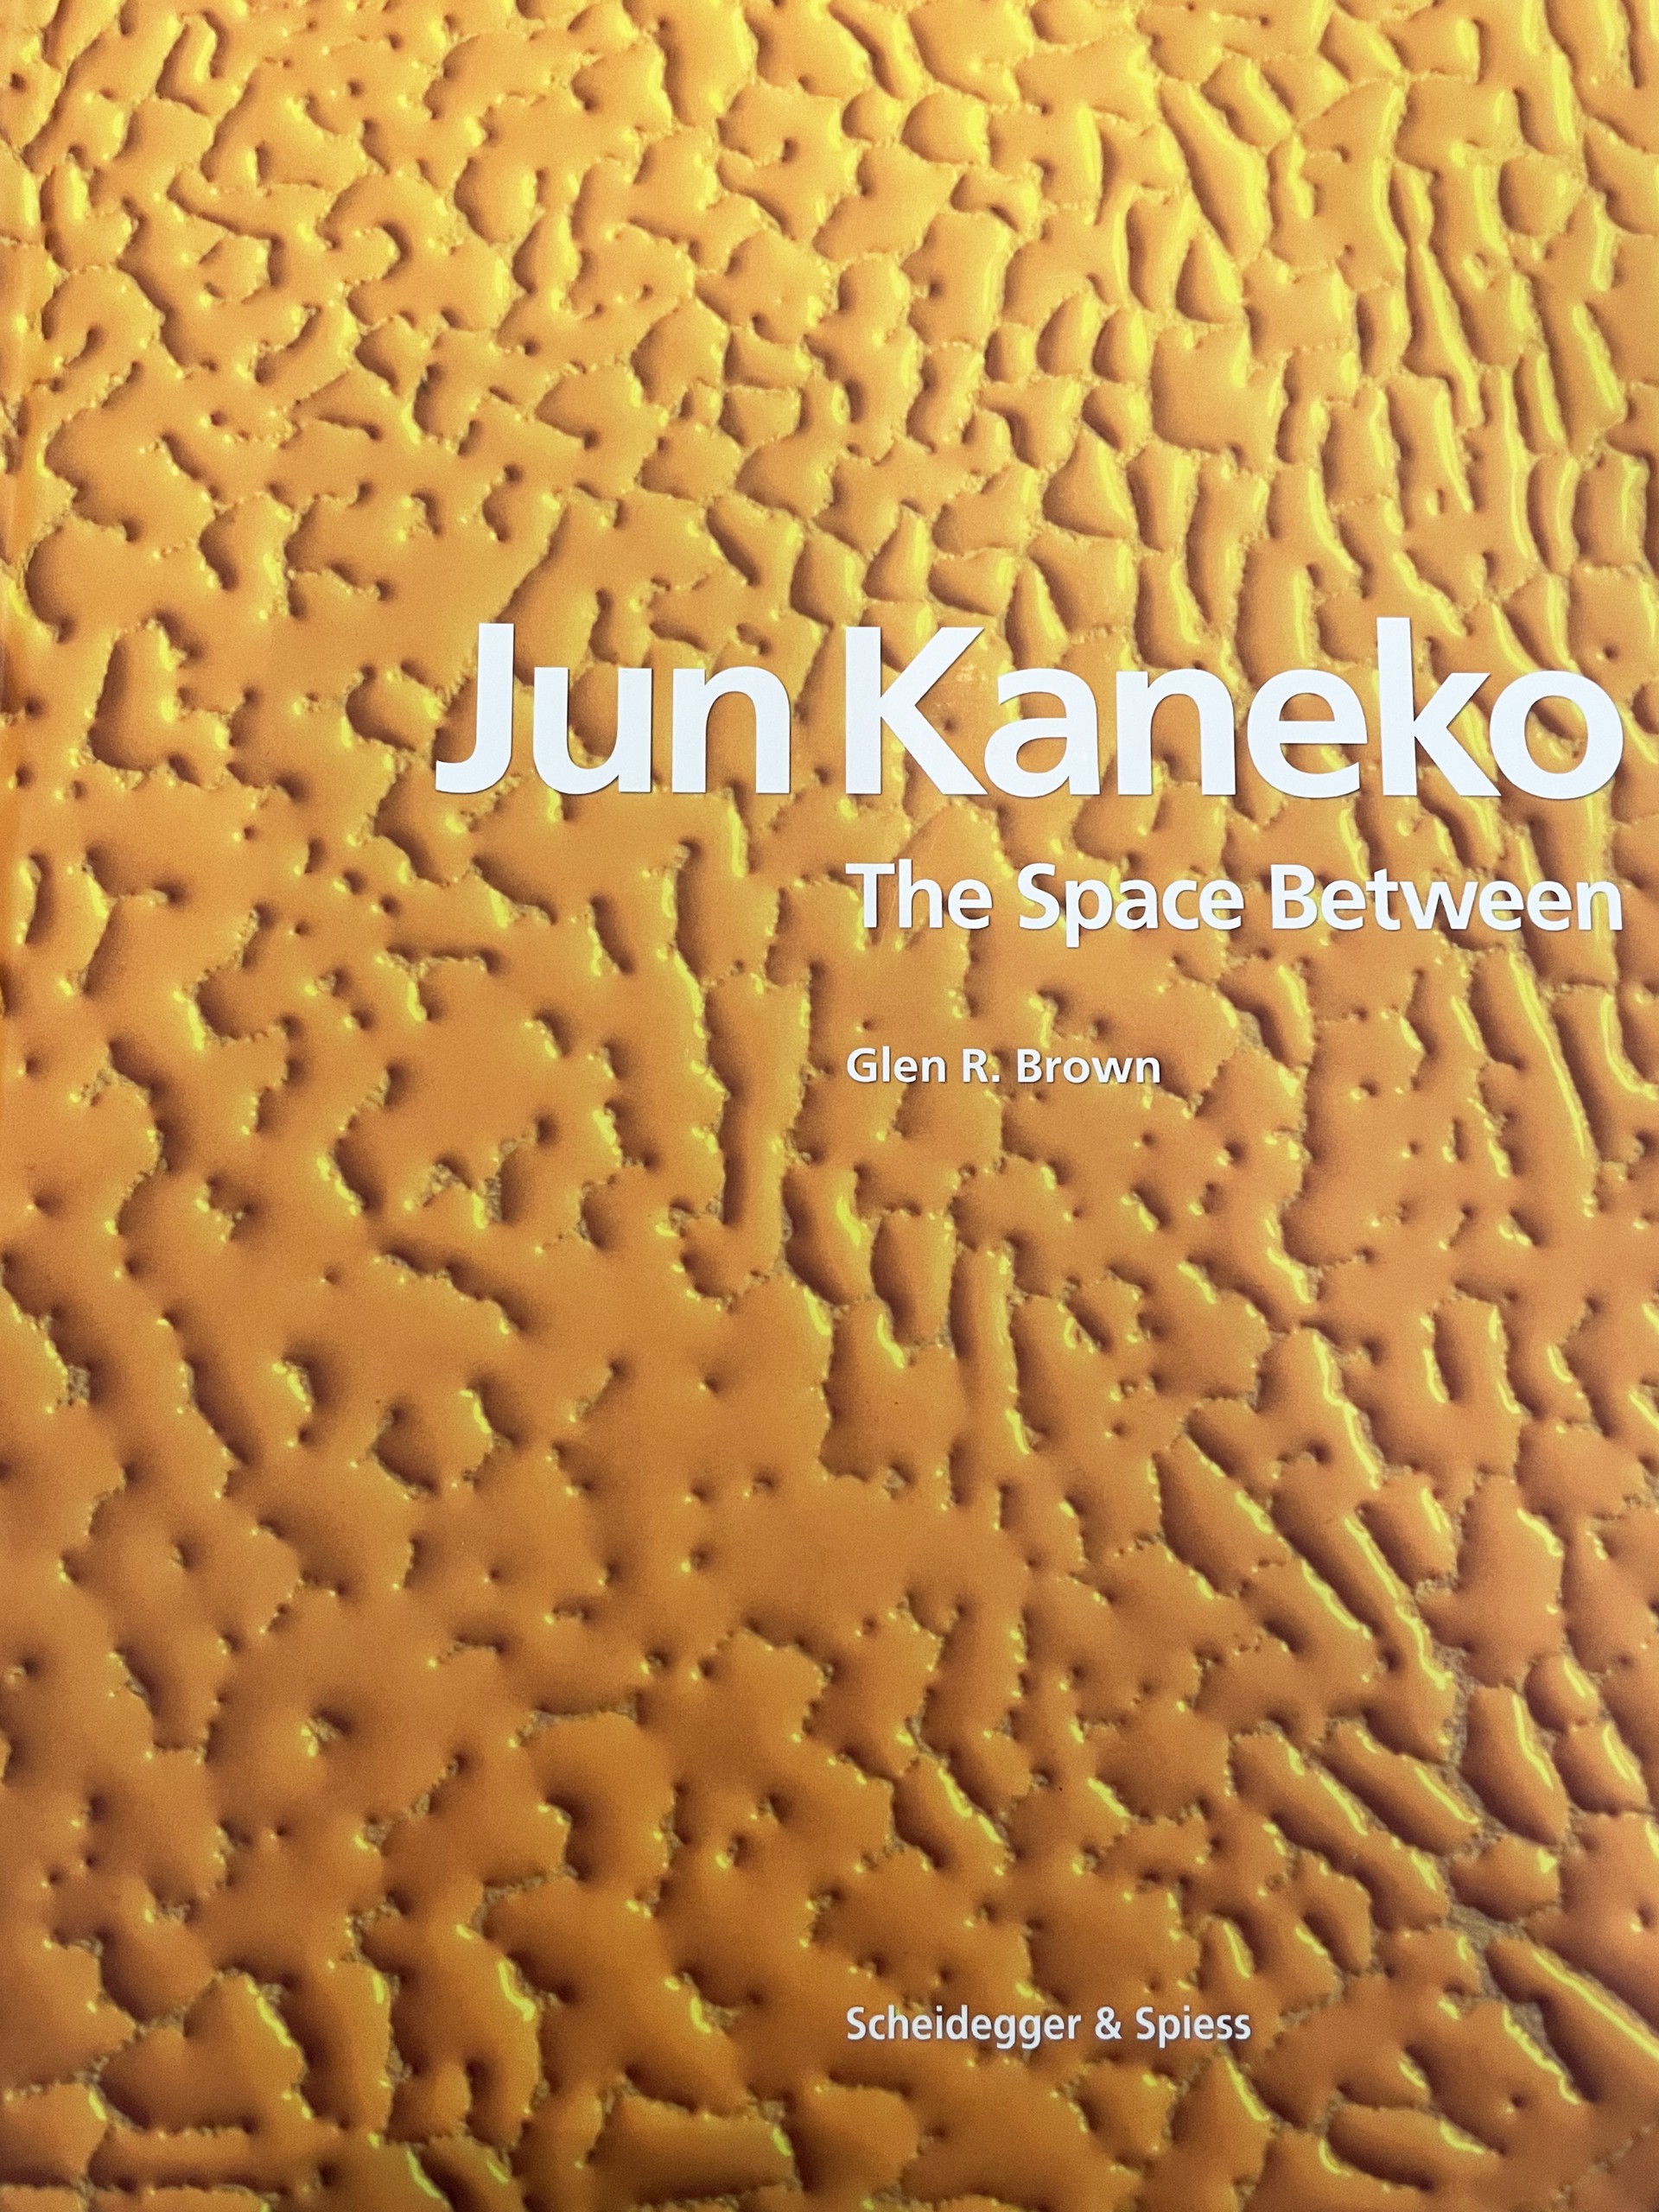 The Space Between by Jun Kaneko